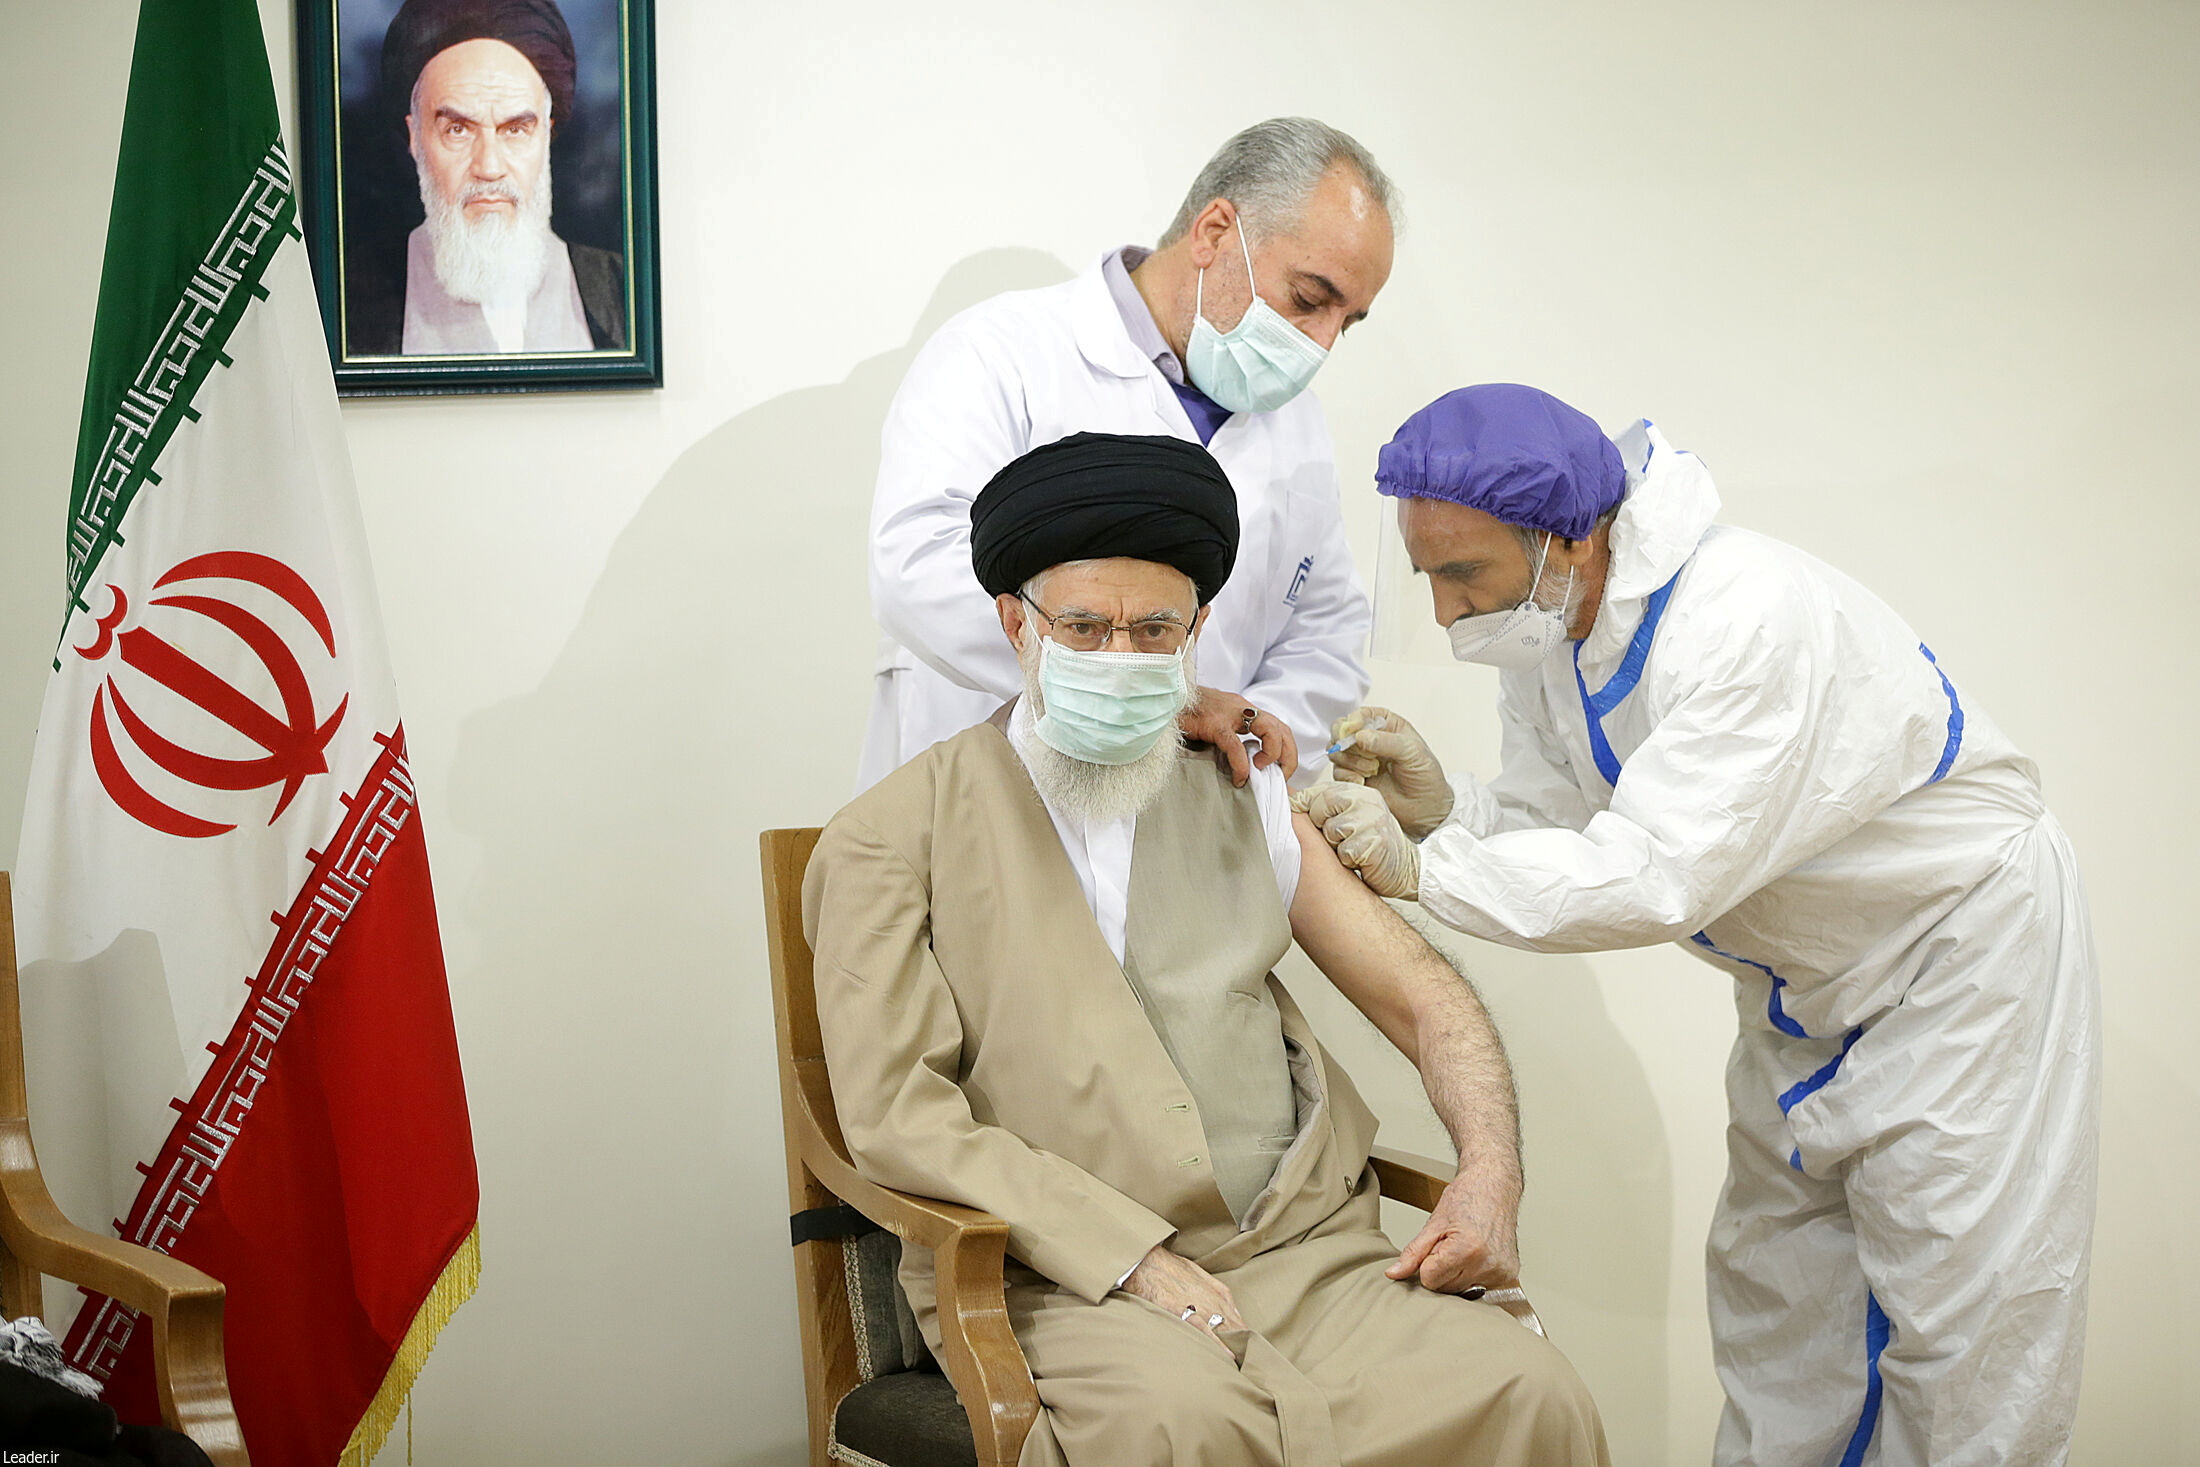 Iran's Supreme Leader Ayatollah Ali Khamenei receives his first dose of the COVIran Barakat vaccine, in Tehran